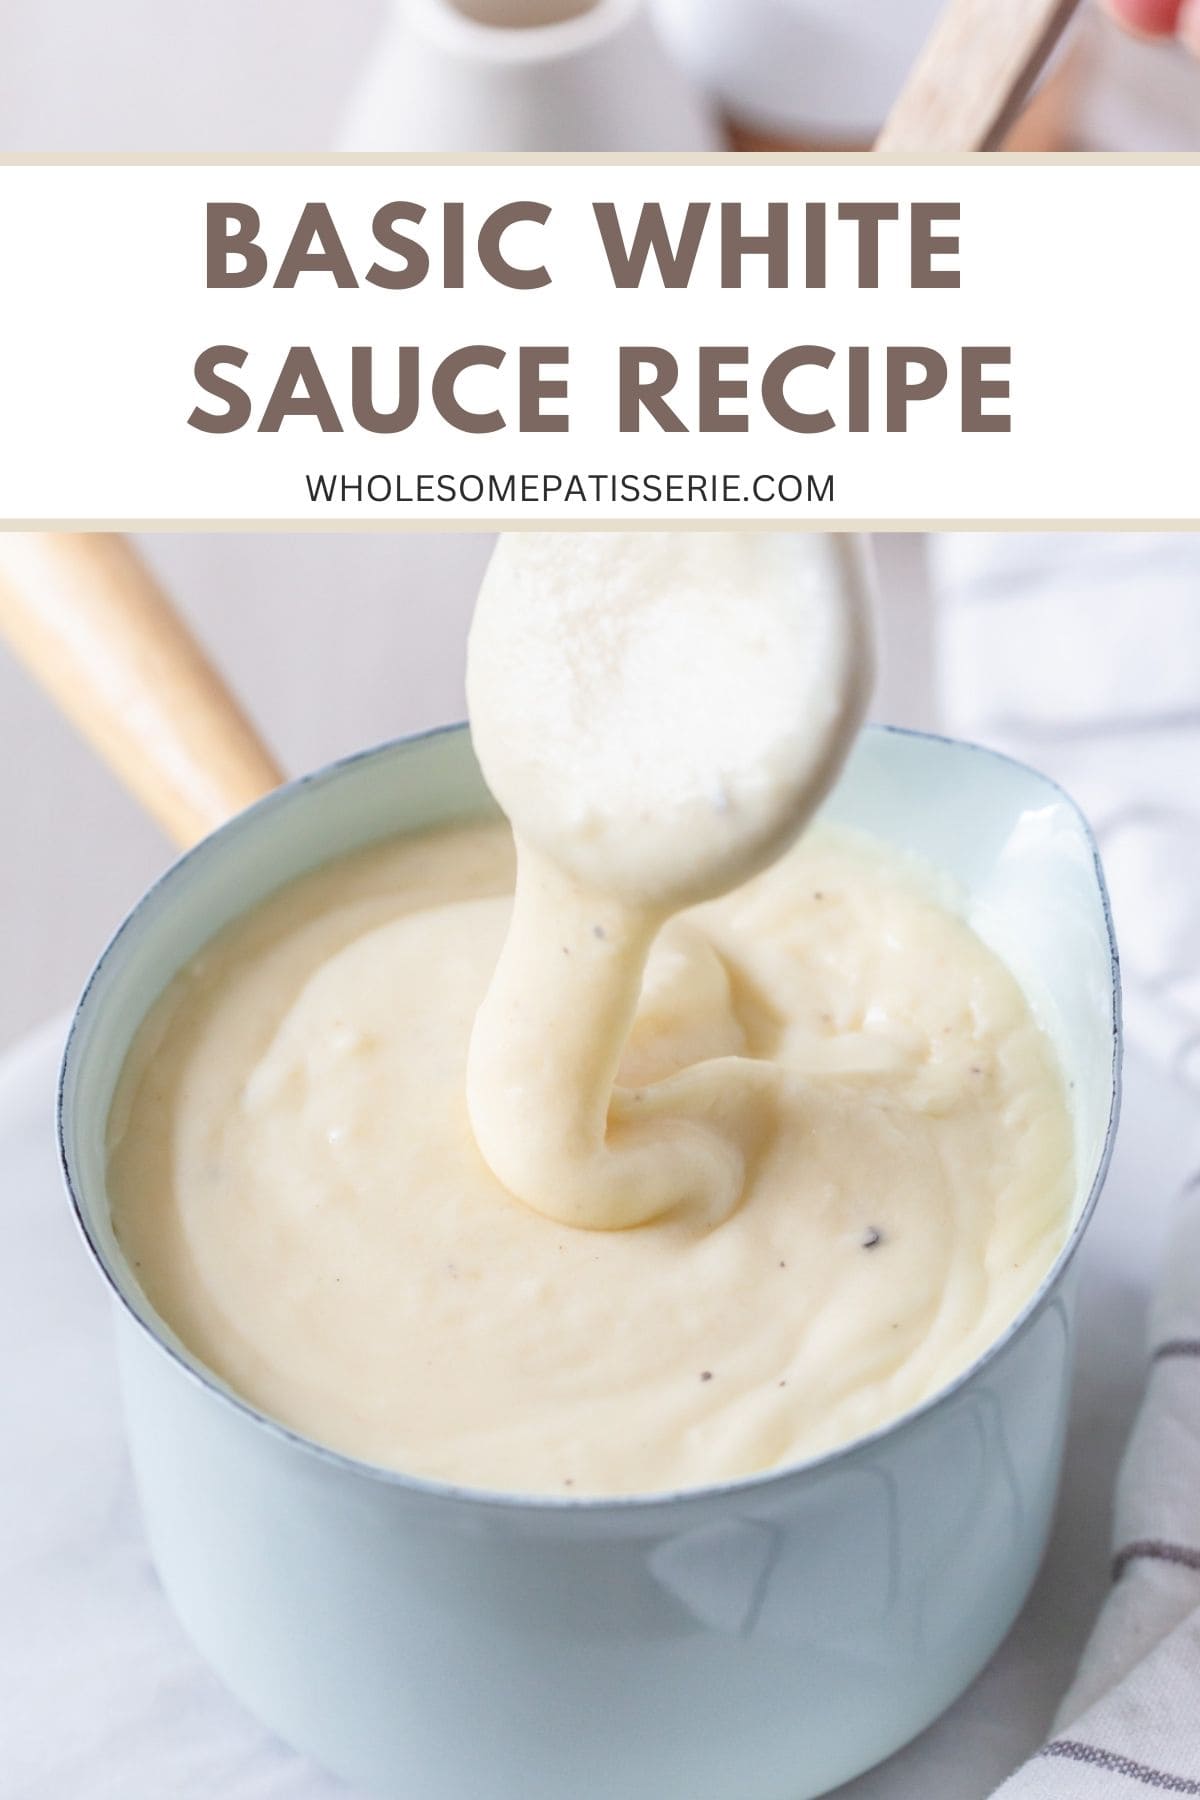 Basic white sauce recipe.